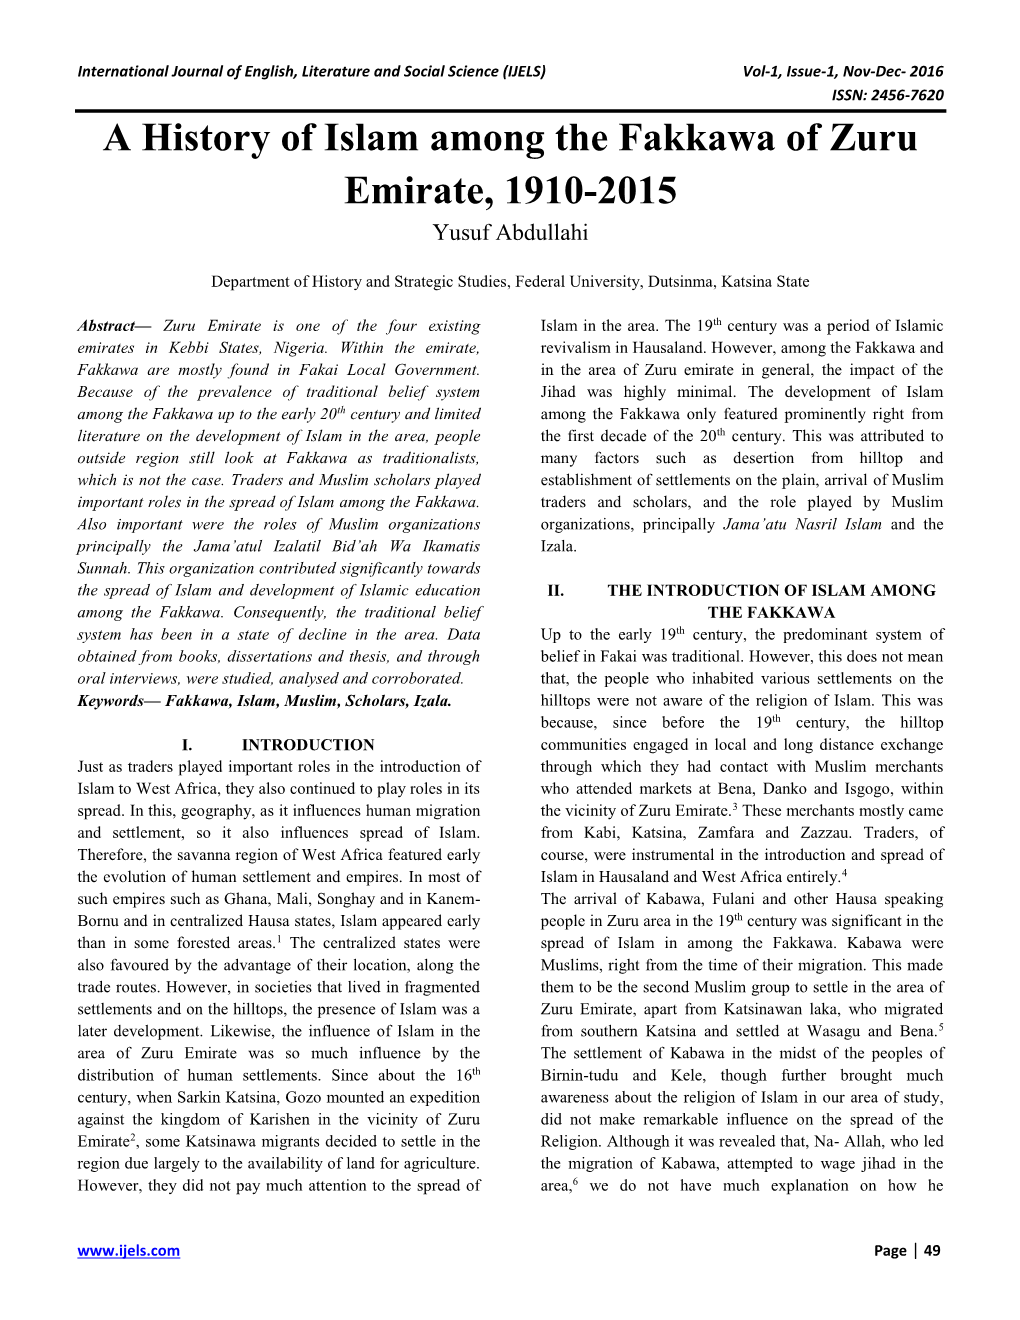 A History of Islam Among the Fakkawa of Zuru Emirate, 1910-2015 Yusuf Abdullahi